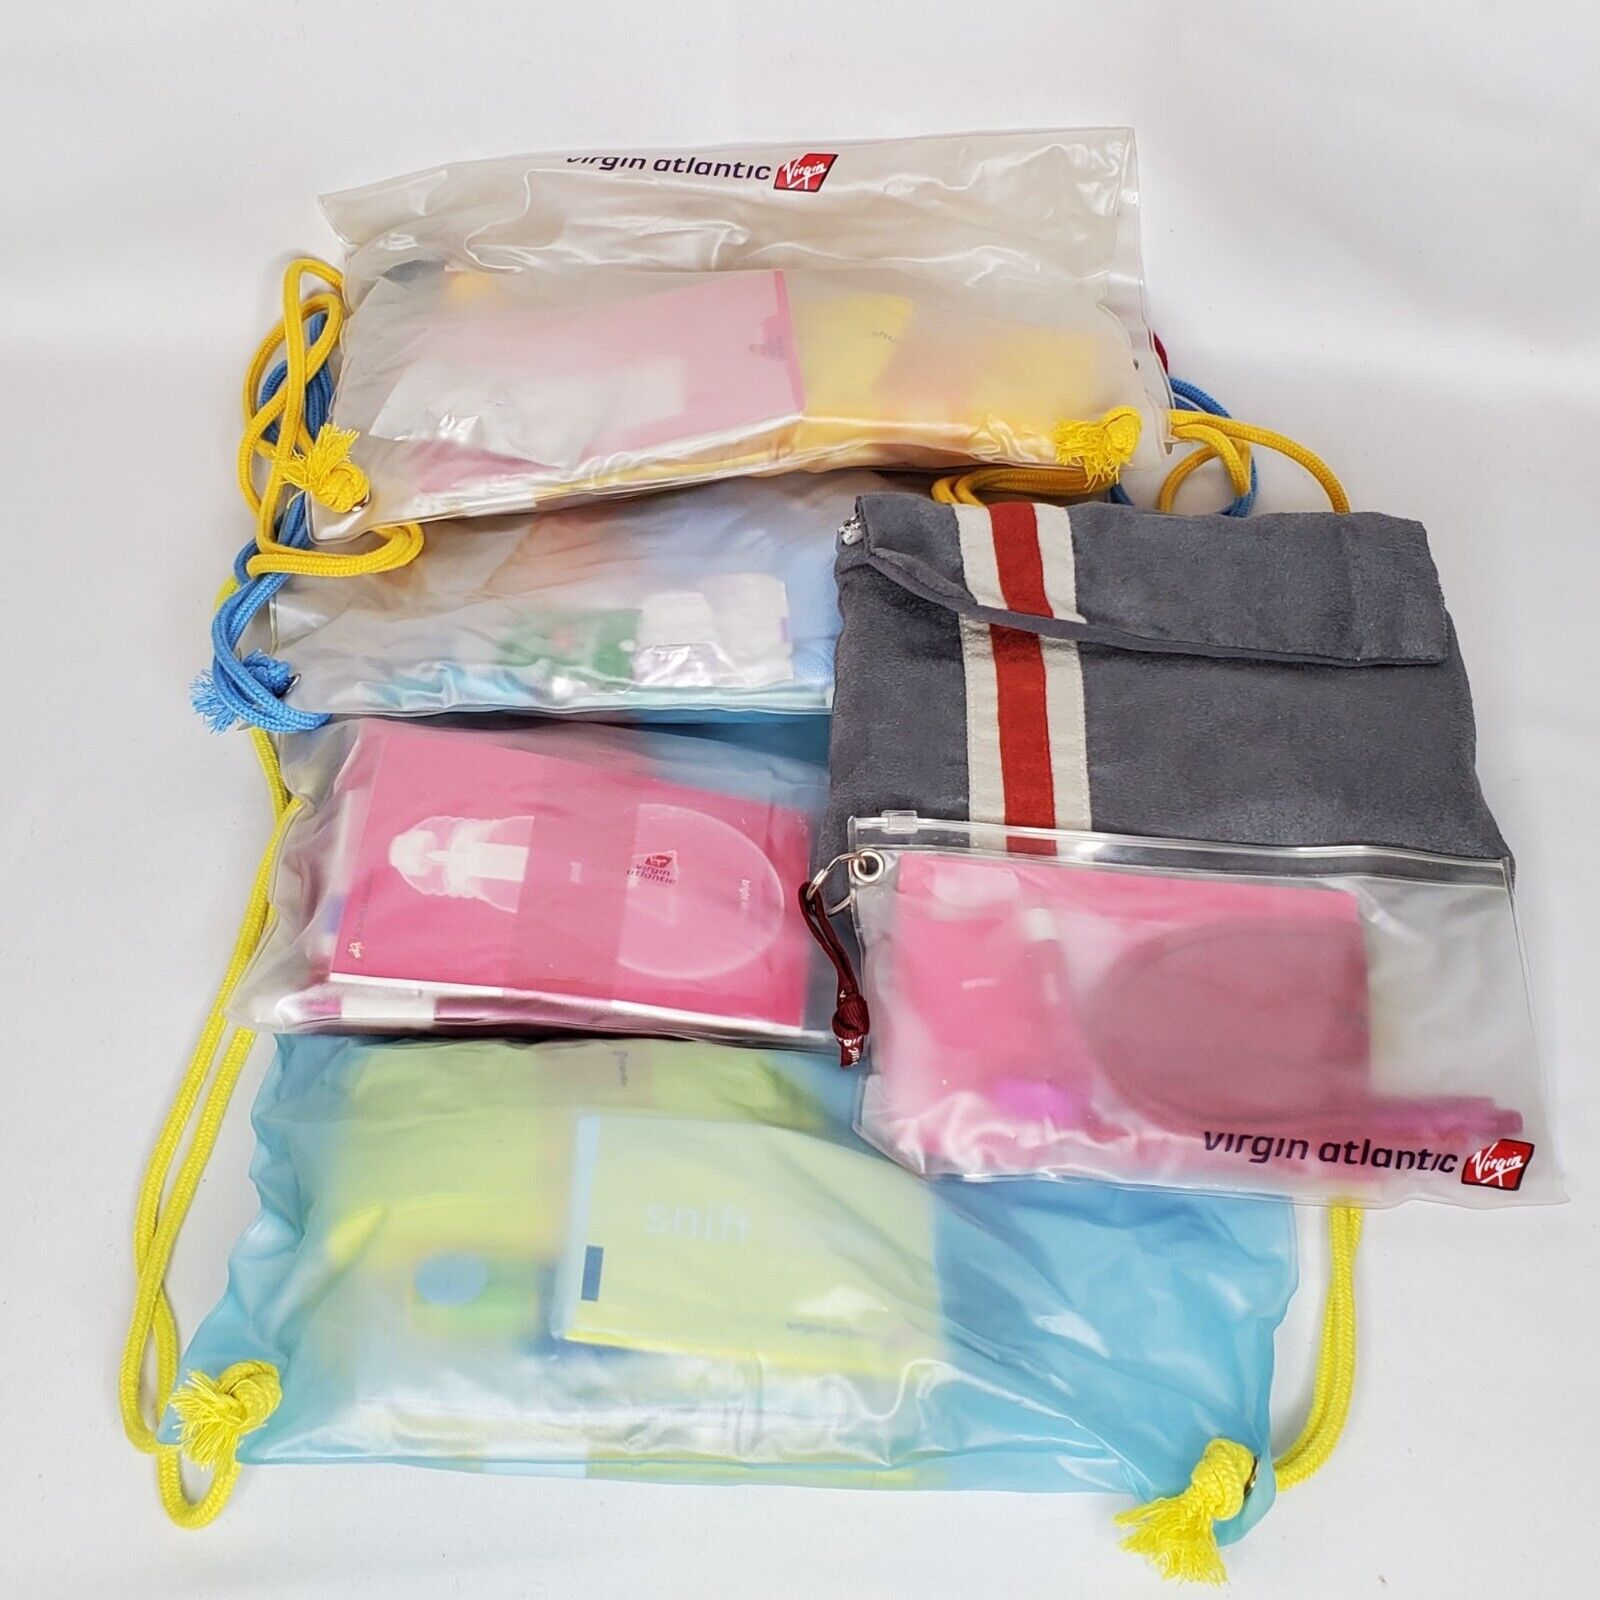 6 Virgin Atlantic Amenity Kit Bags Rubber Duck Toothbrush Pen Paper Socks Mints